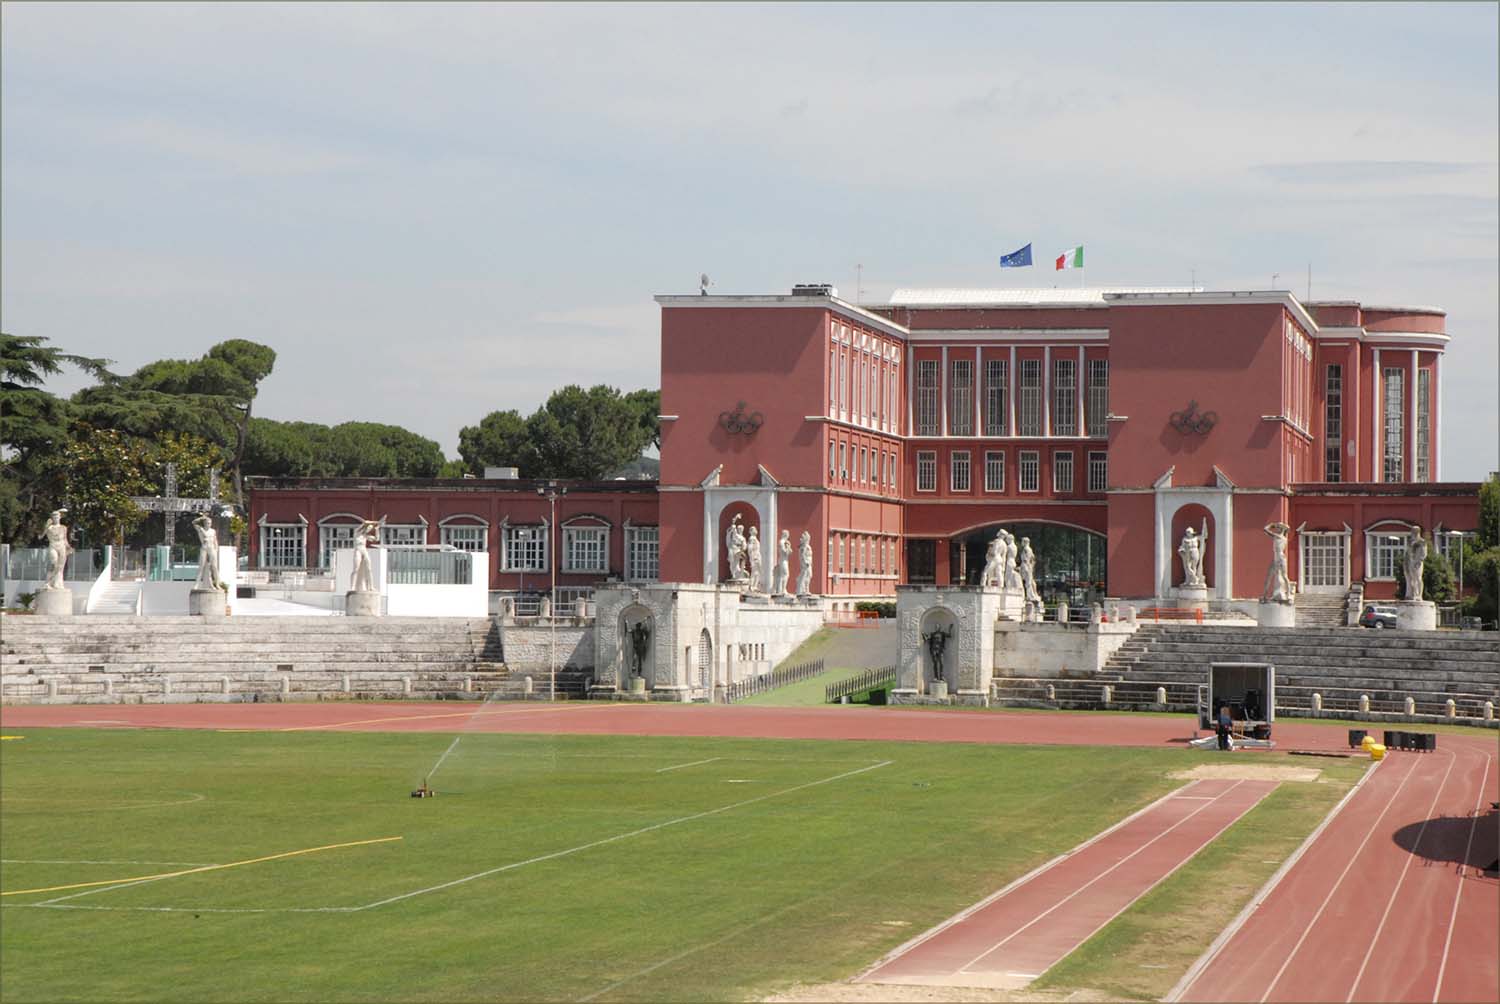 Foro Italico - Stadio dei Marmi Photo by Jean-Pierre Dalbéra / Wikimedia Commons, License CC Attribution 2.0 Generic (CC BY 2.0)